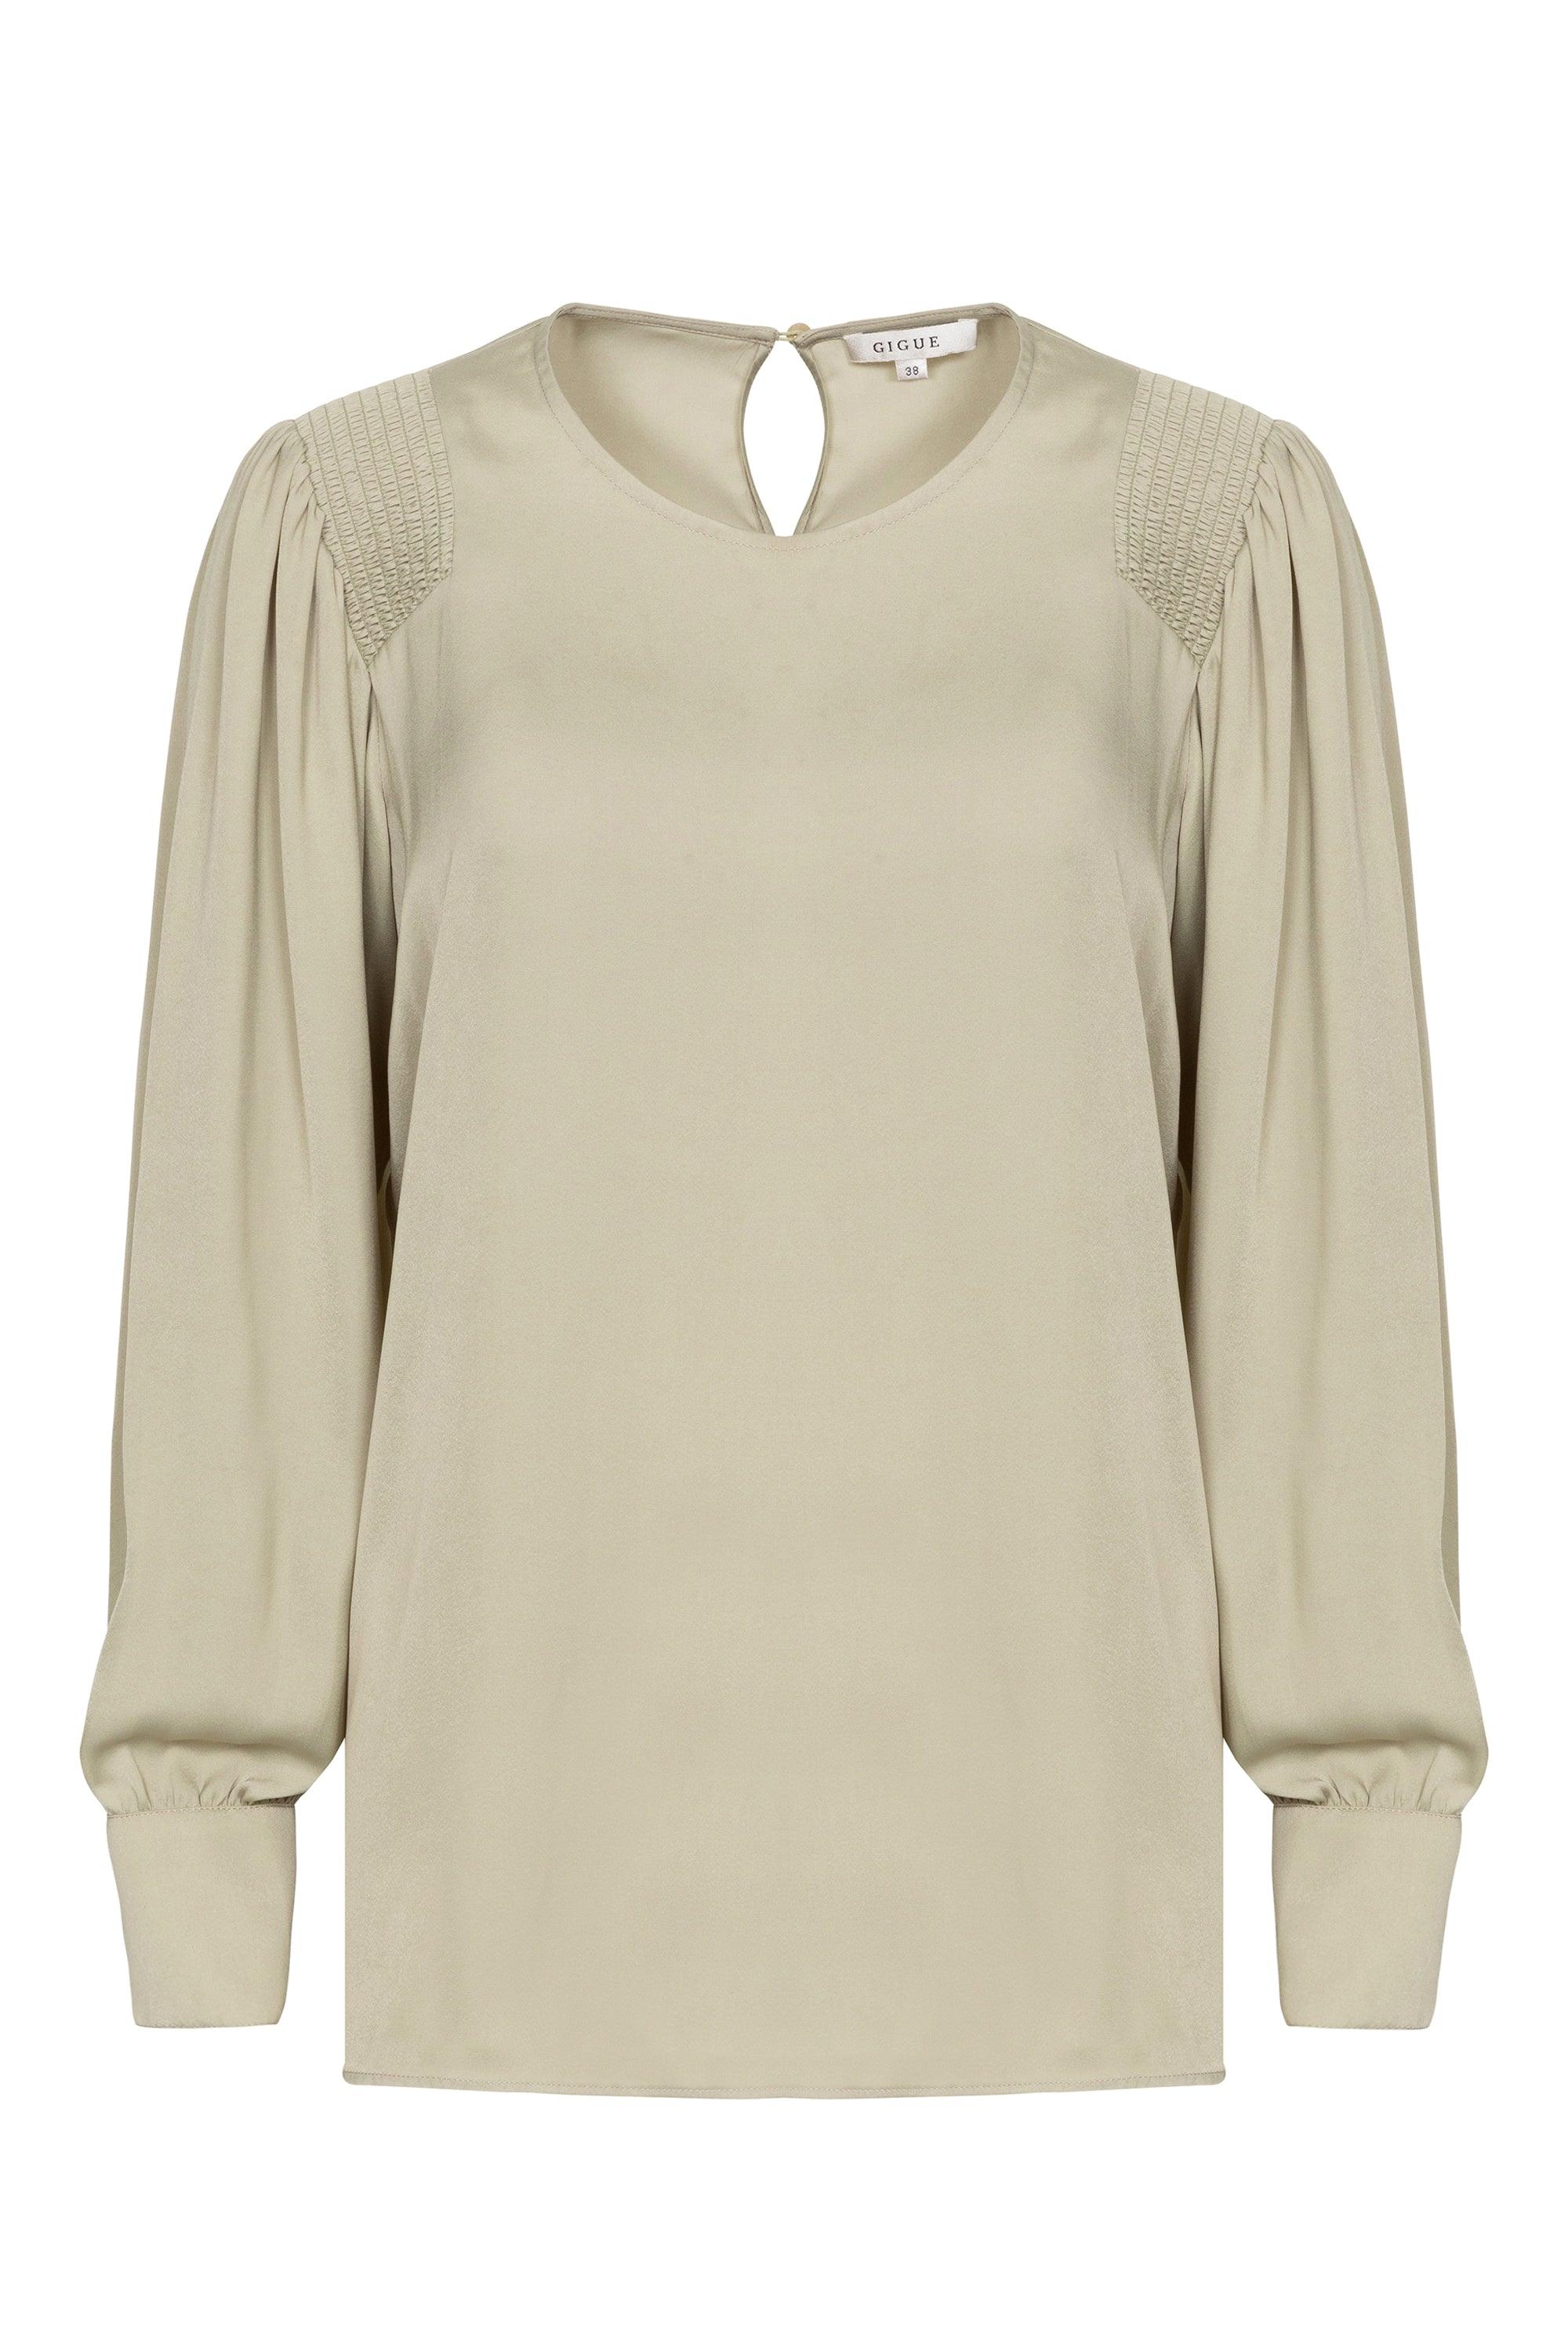 Bloes Groen Gigue ( Hana 720/550 ) - Delaere Womenswear